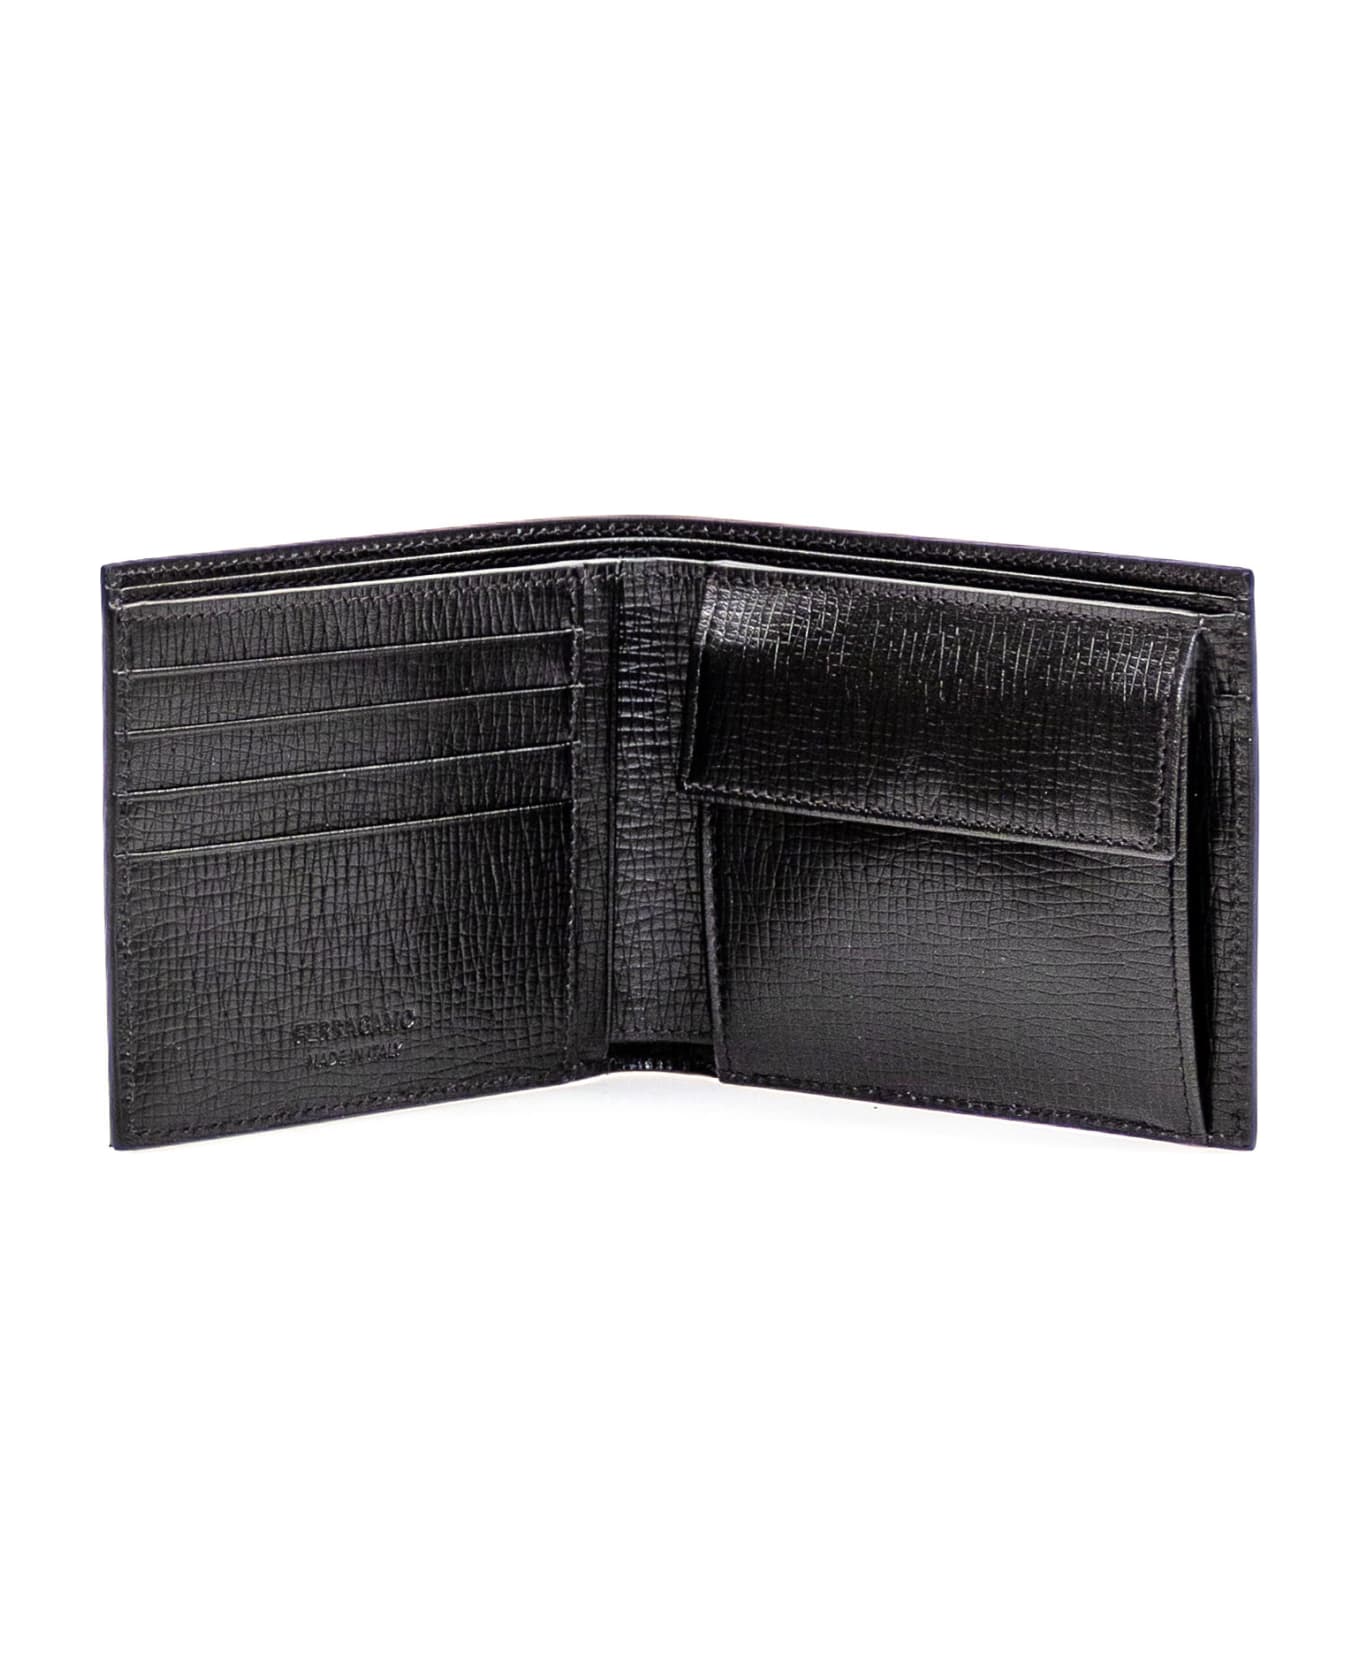 Ferragamo Leather Wallet - NERO